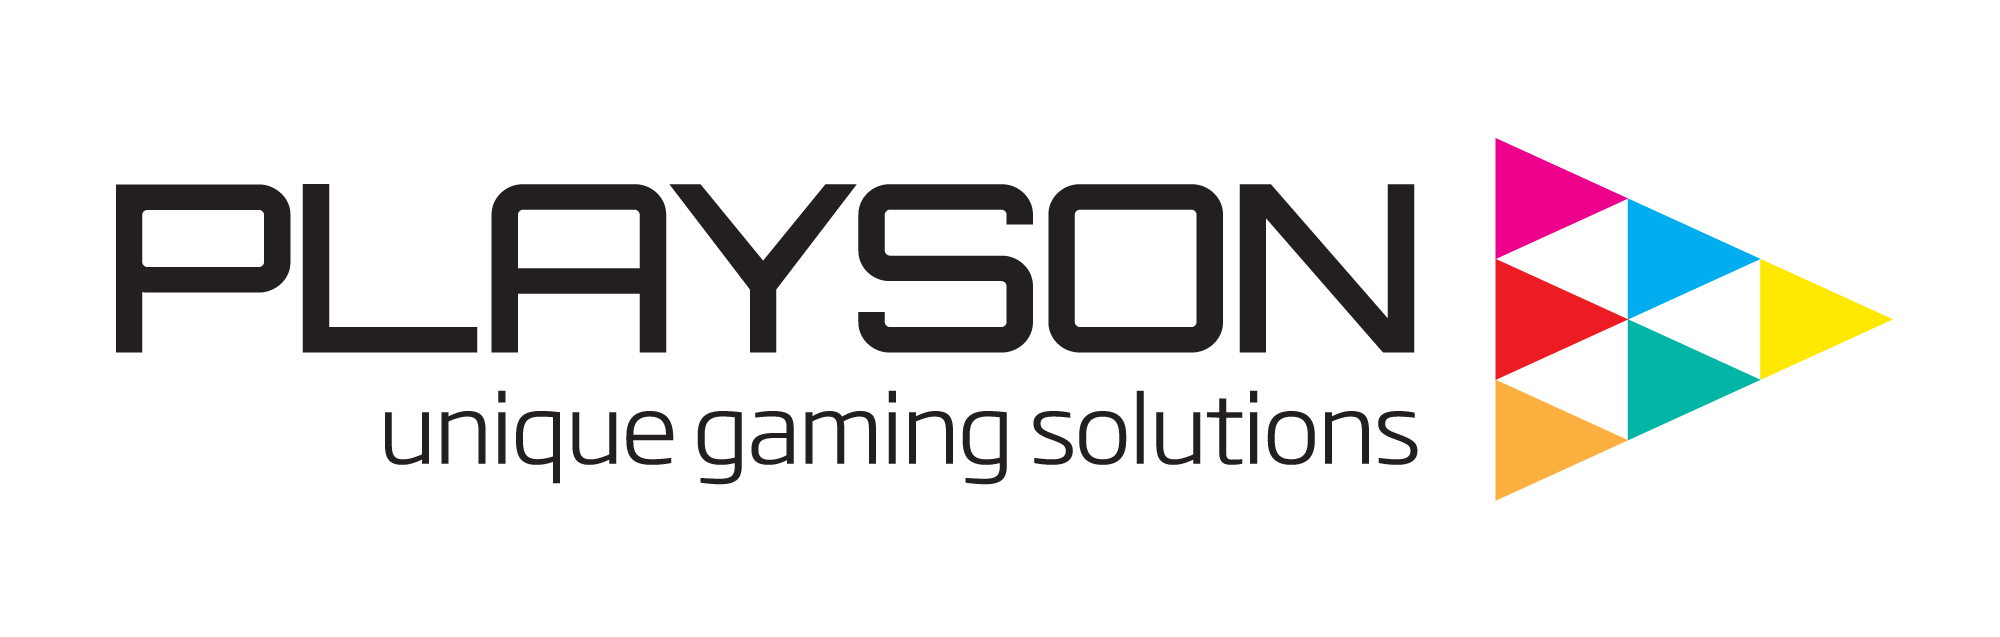 Image of Playson Gaming logo